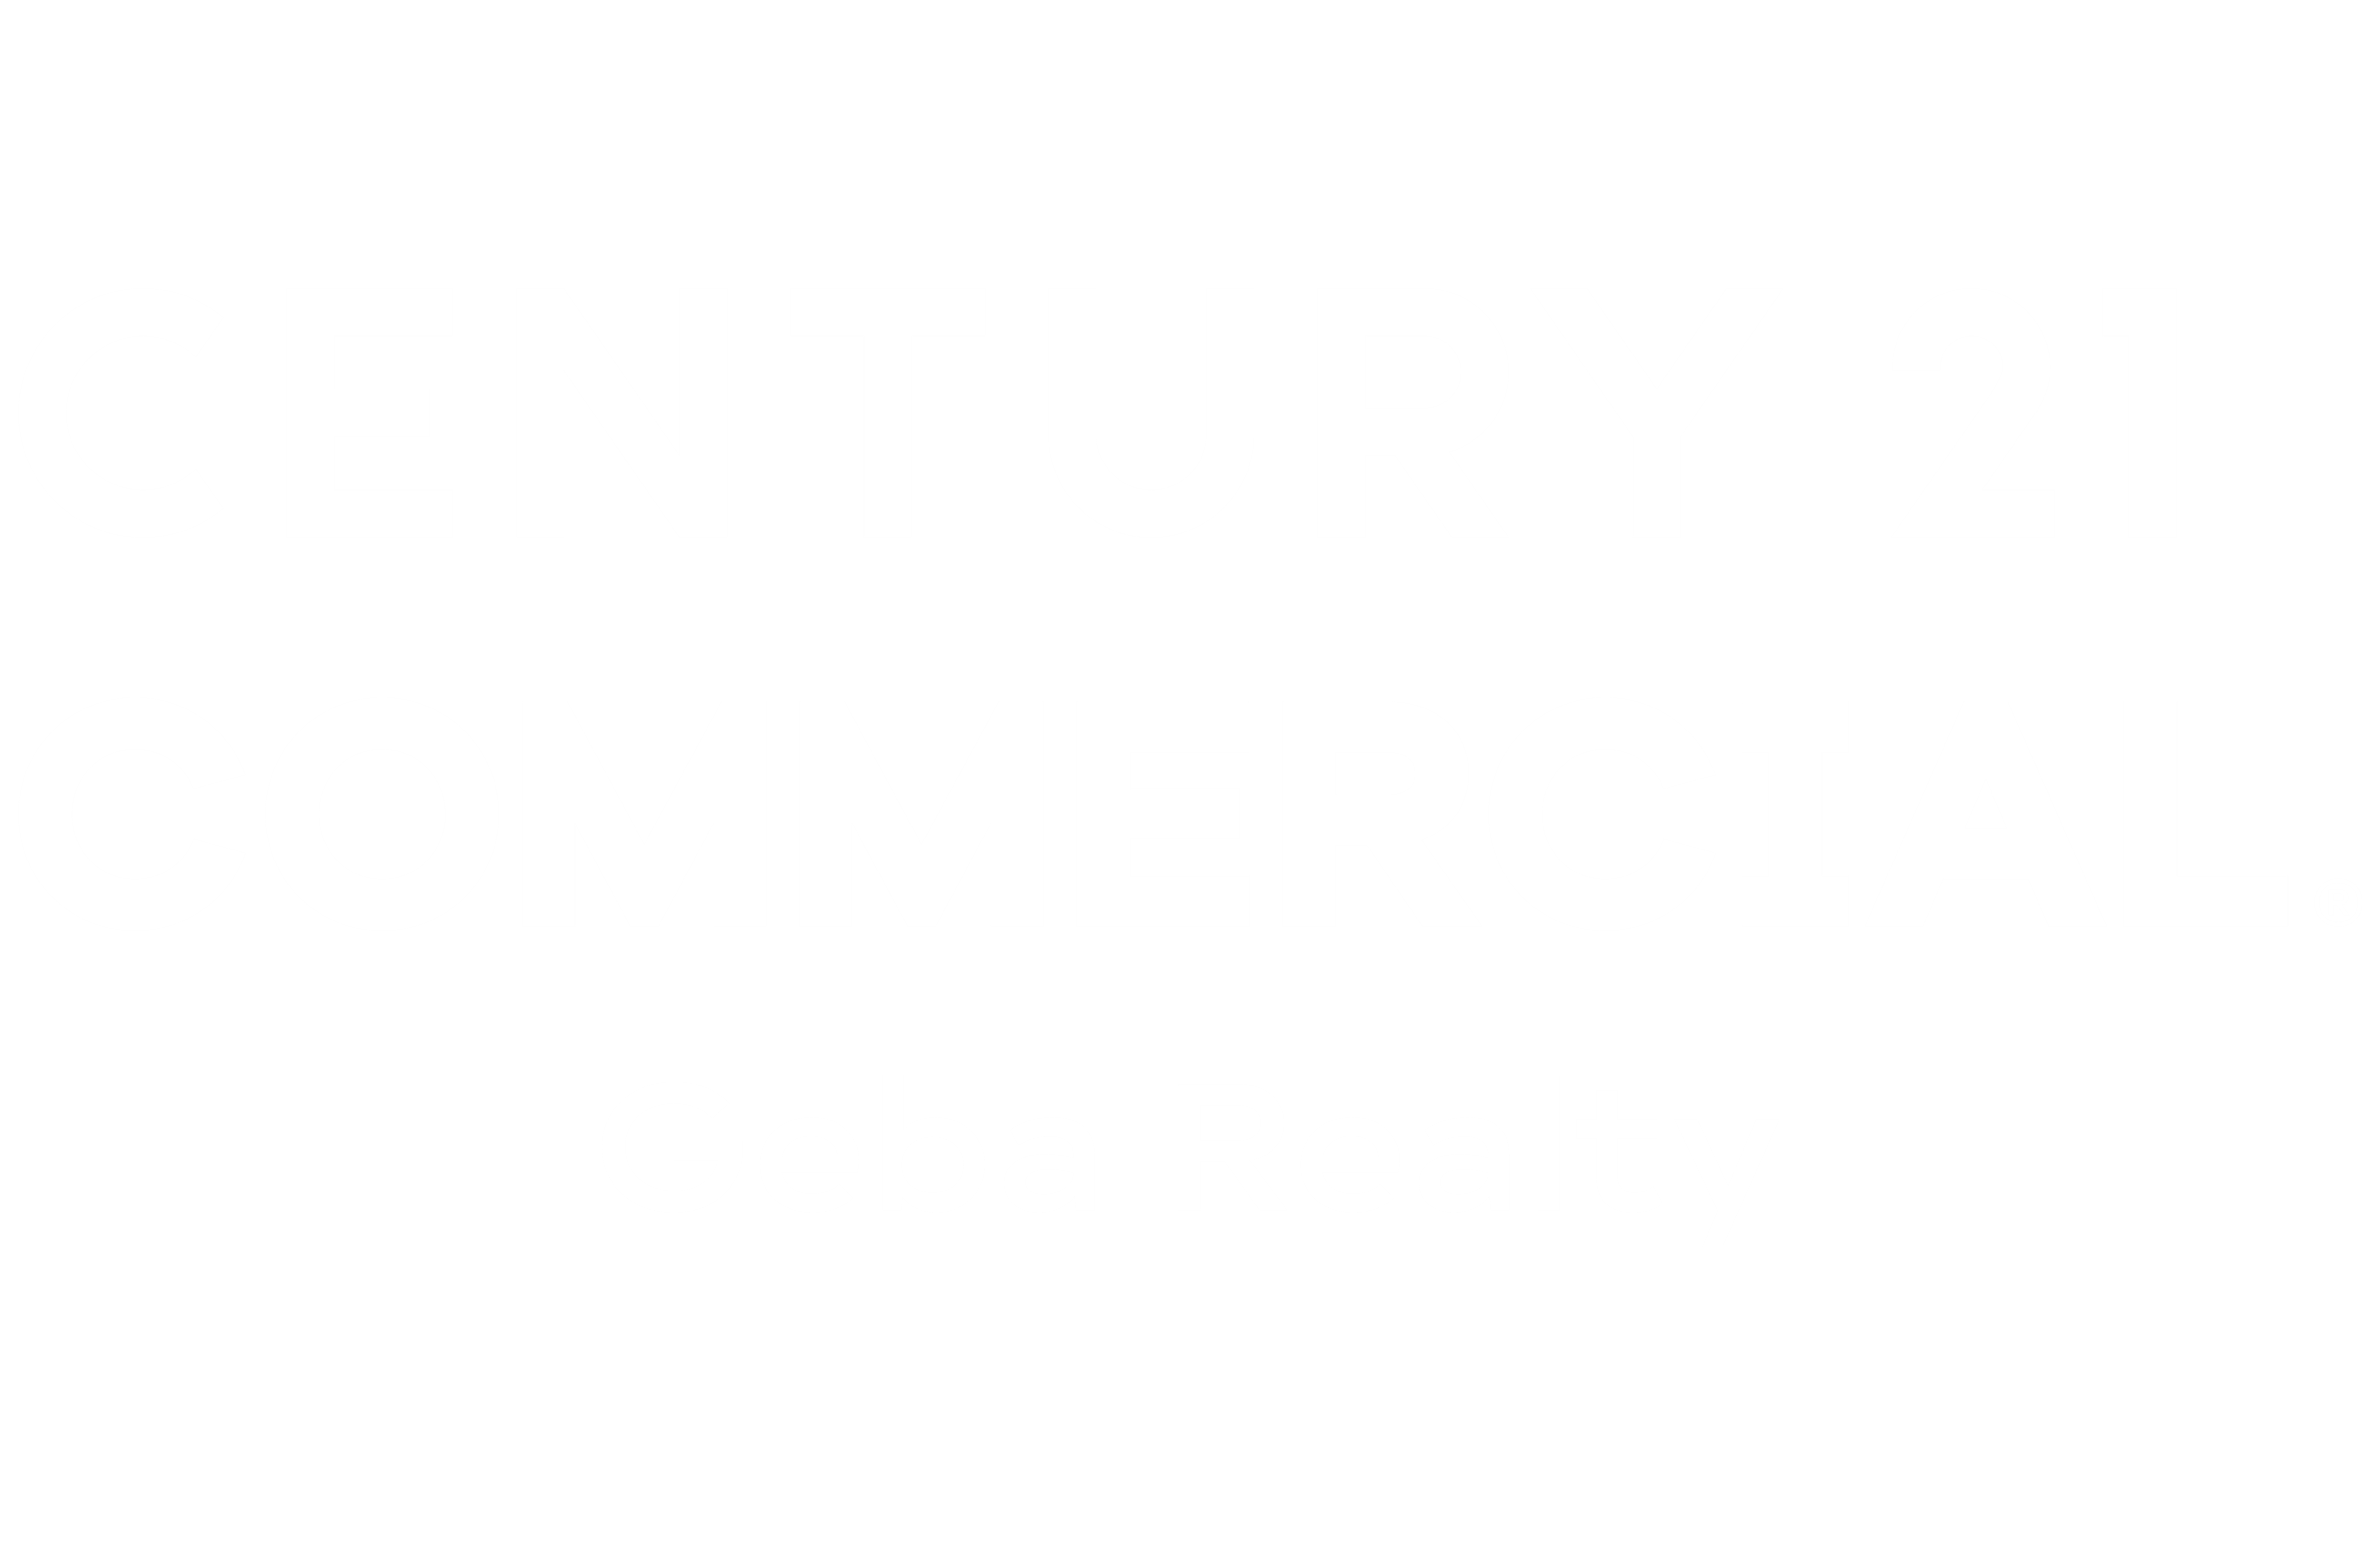 CommercialCenter